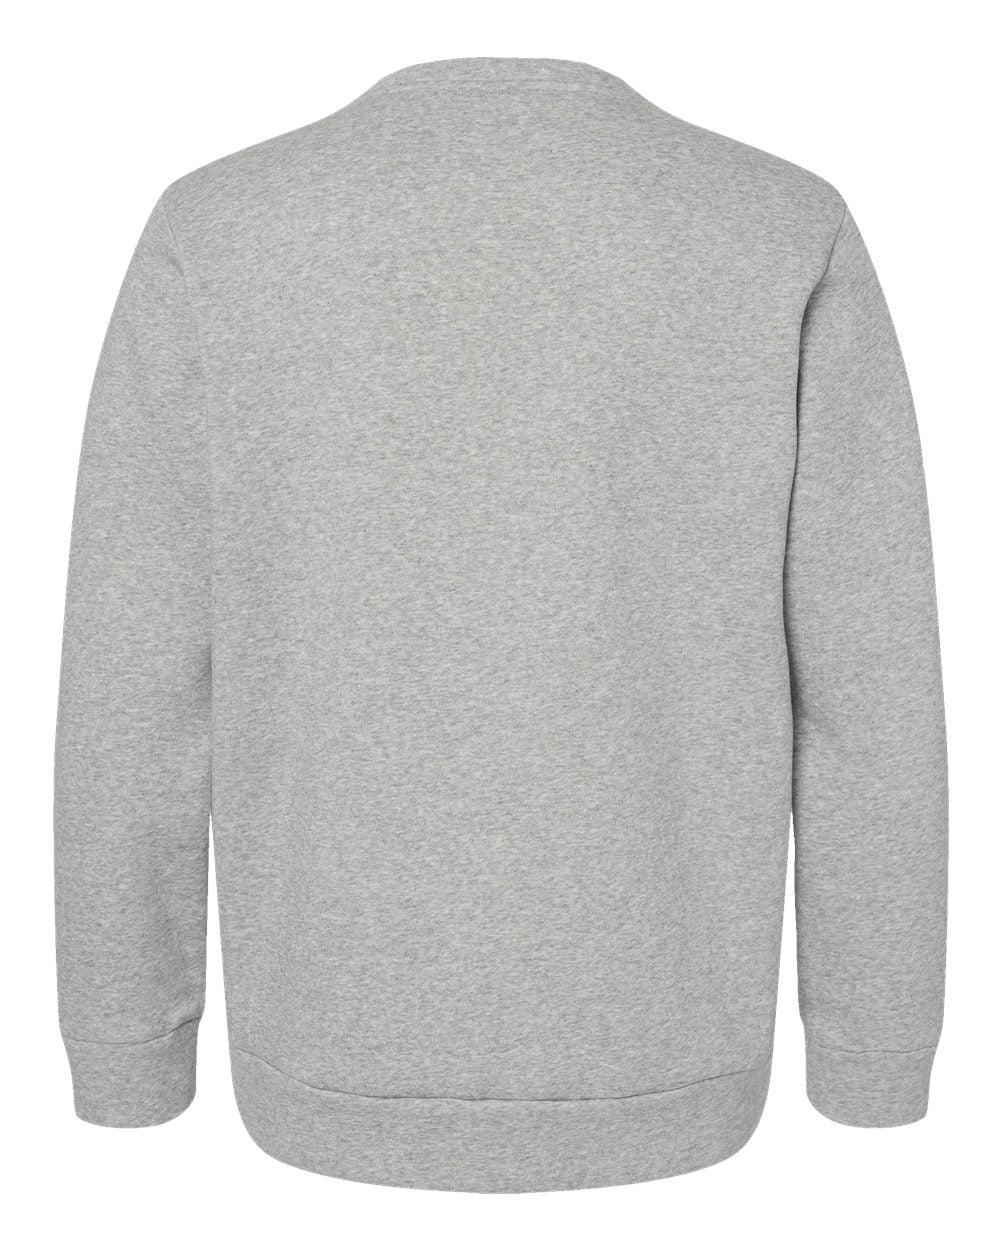 Hardwood - Adidas - Fleece Crewneck Sweatshirt - Grey - IMS Apparel A434Grey-S